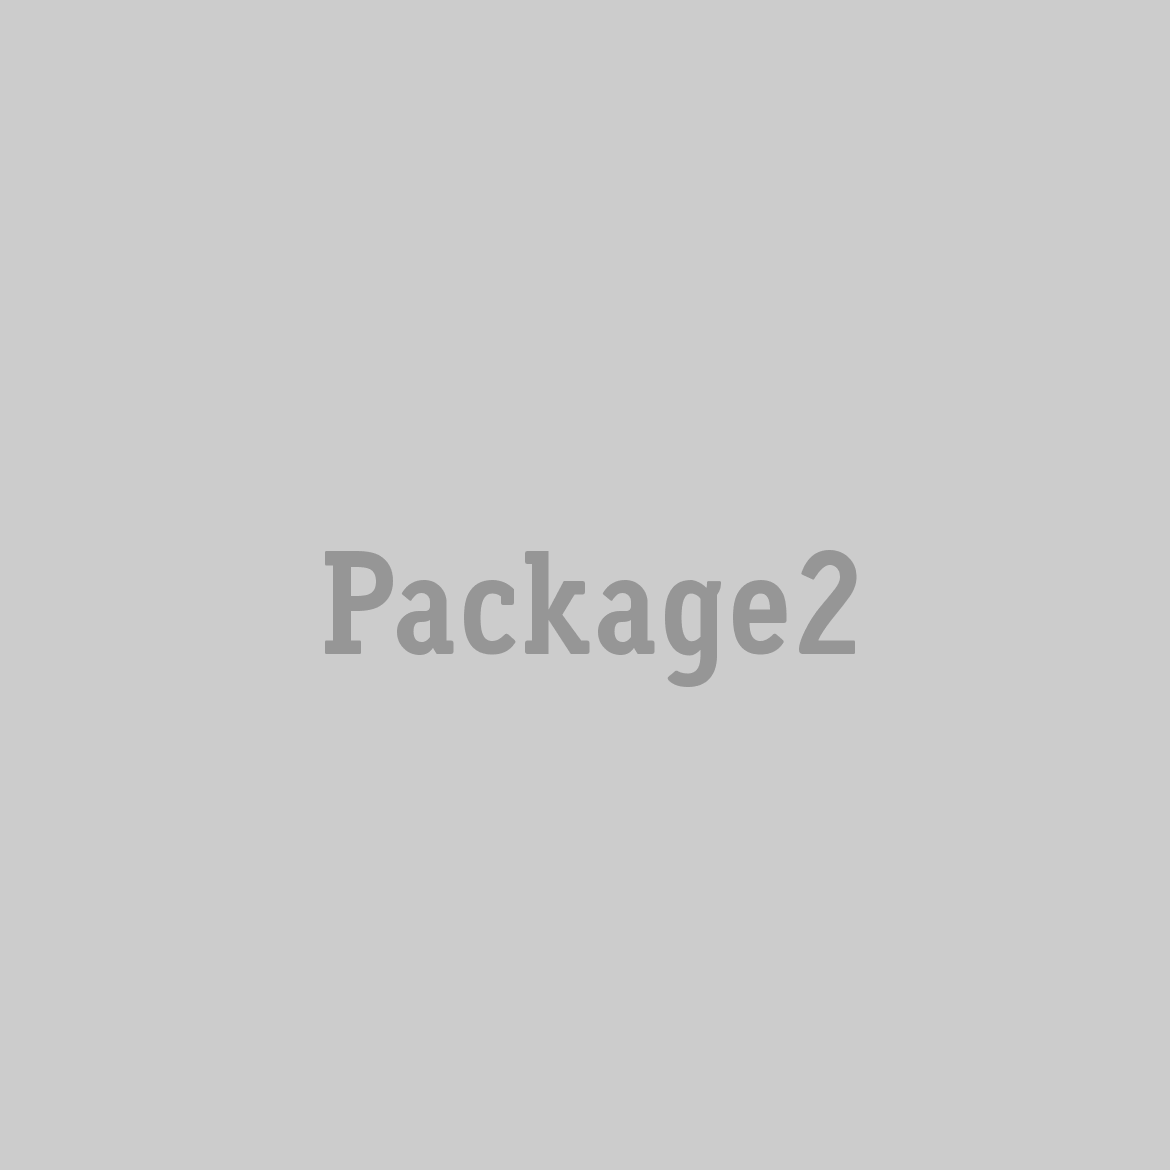 Package2